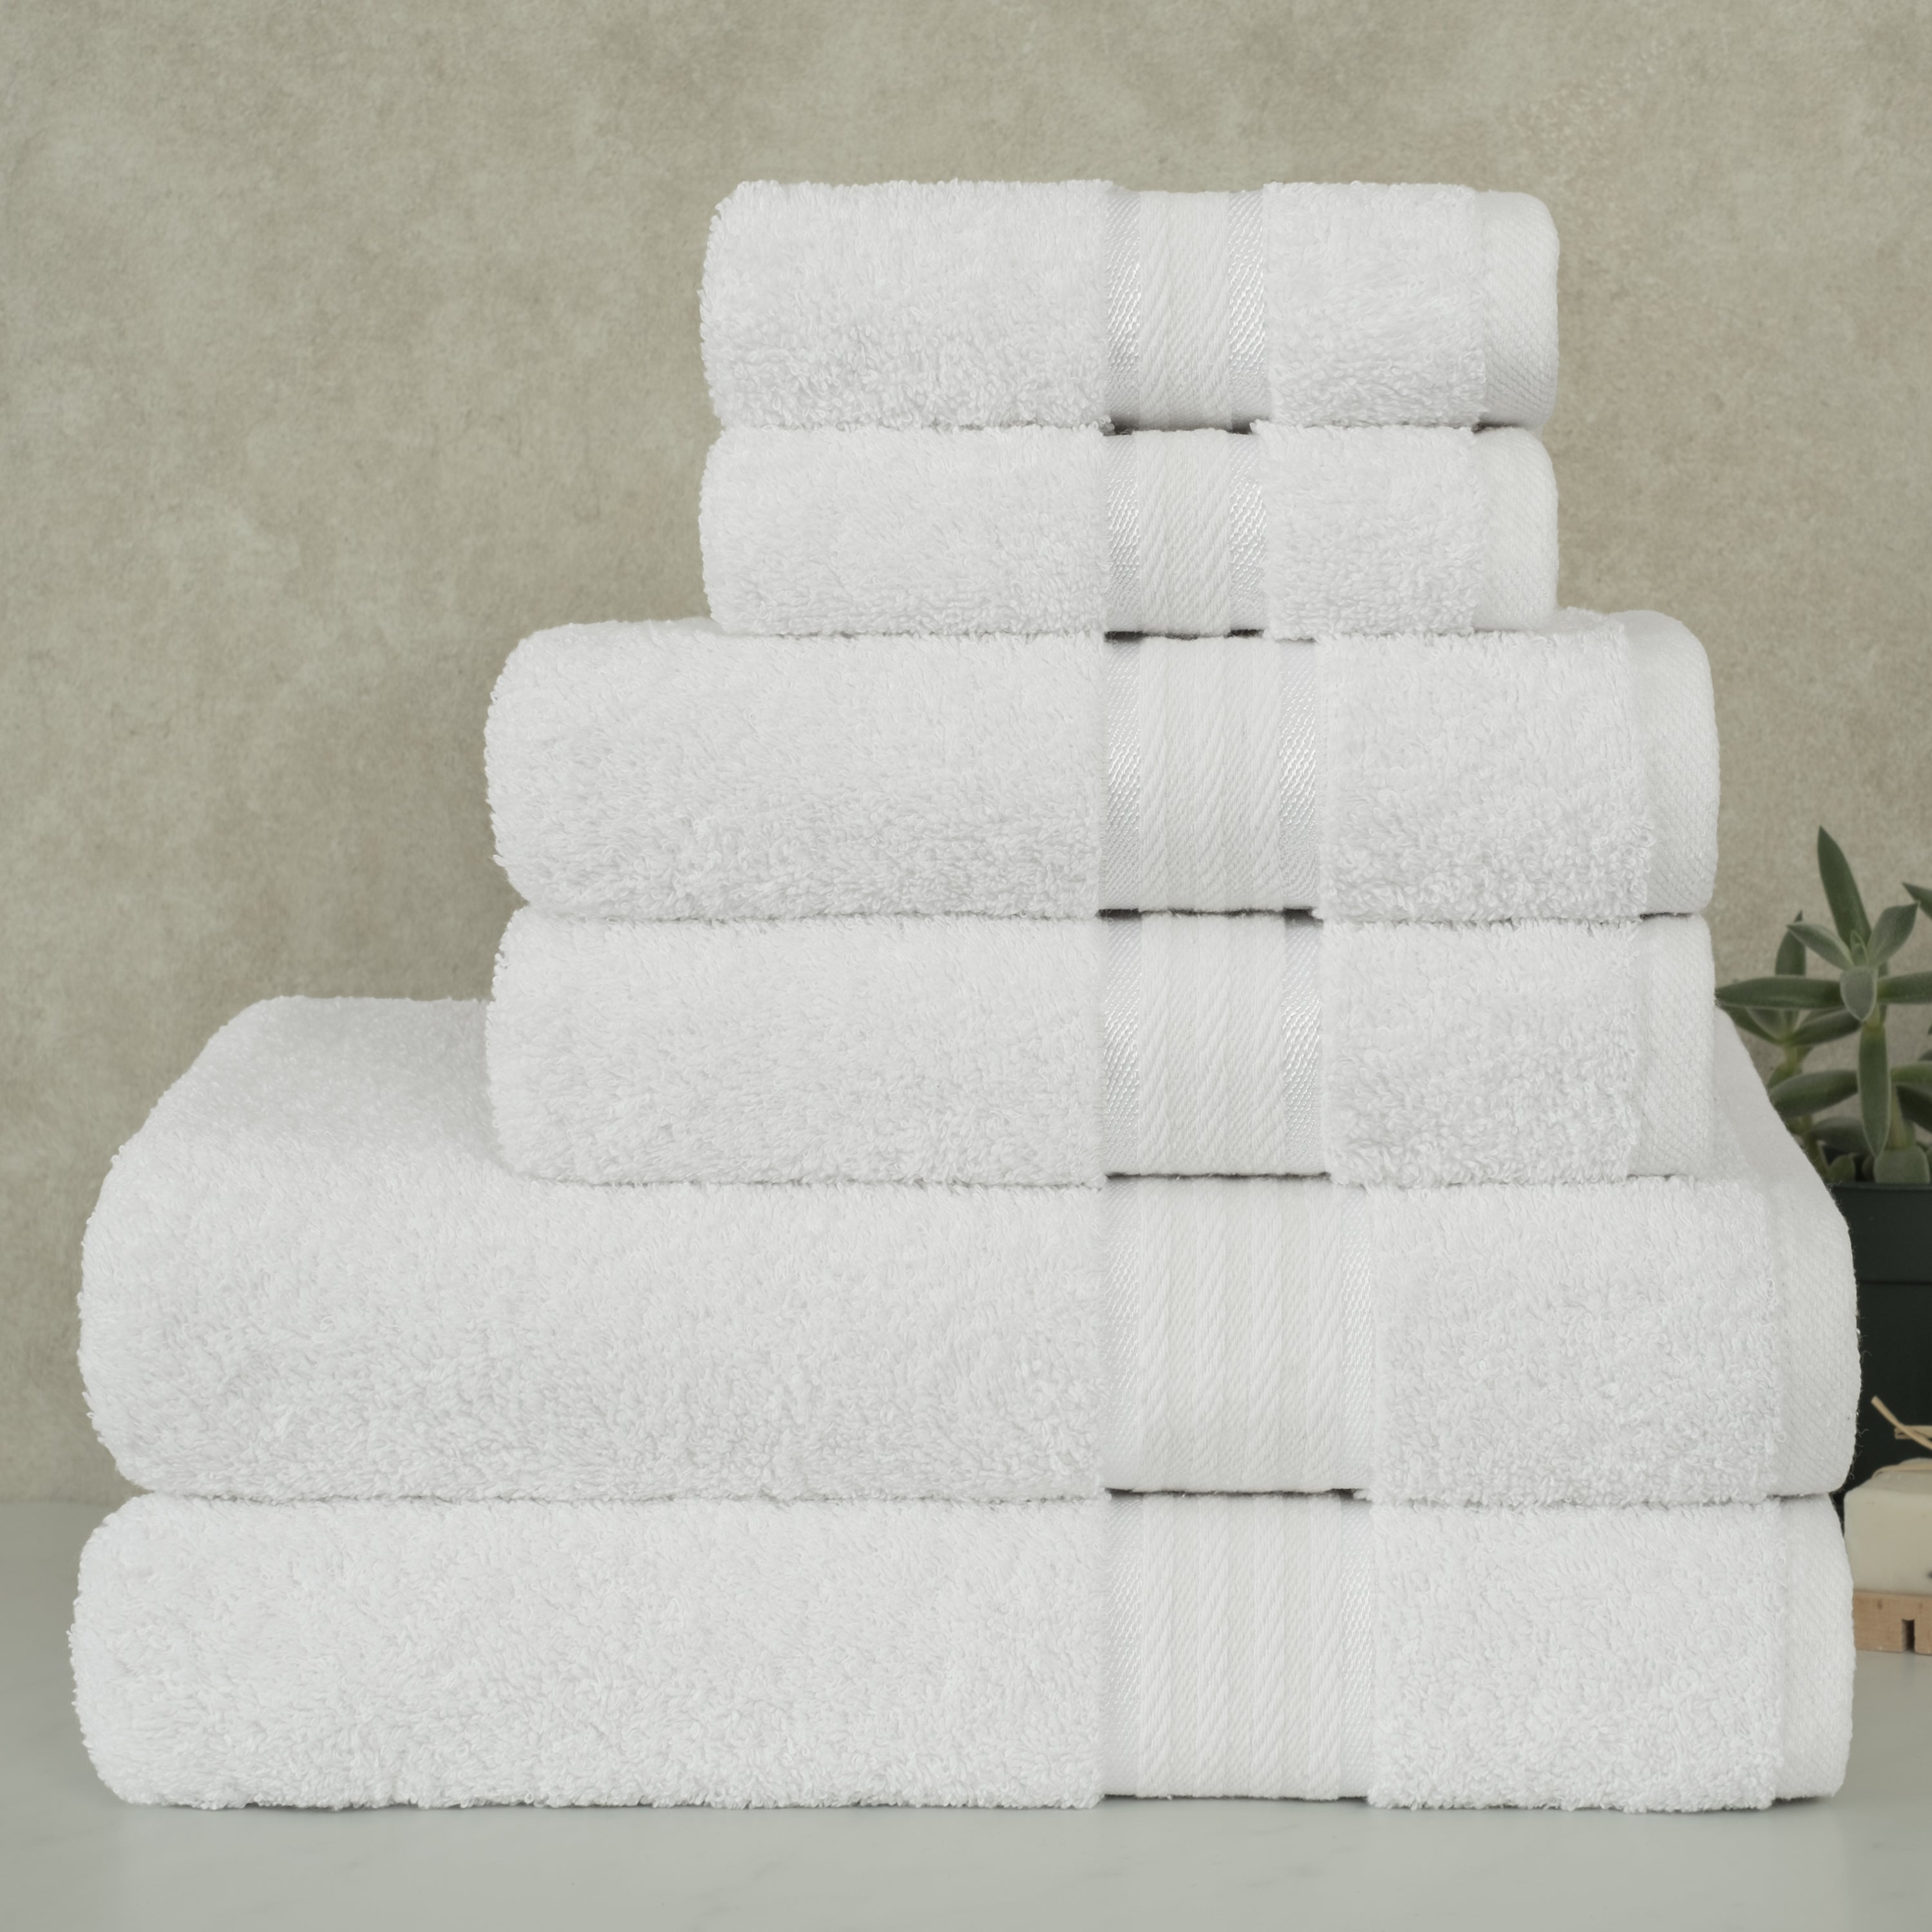 American Soft Linen Salem Bath Towel Set, 6 Piece Towels for Bathroom, 100%  Turkish Combed Zero Twist Cotton, 2 Bath Towels 2 Hand Towels 2 Washcloths,  Light Grey - Yahoo Shopping